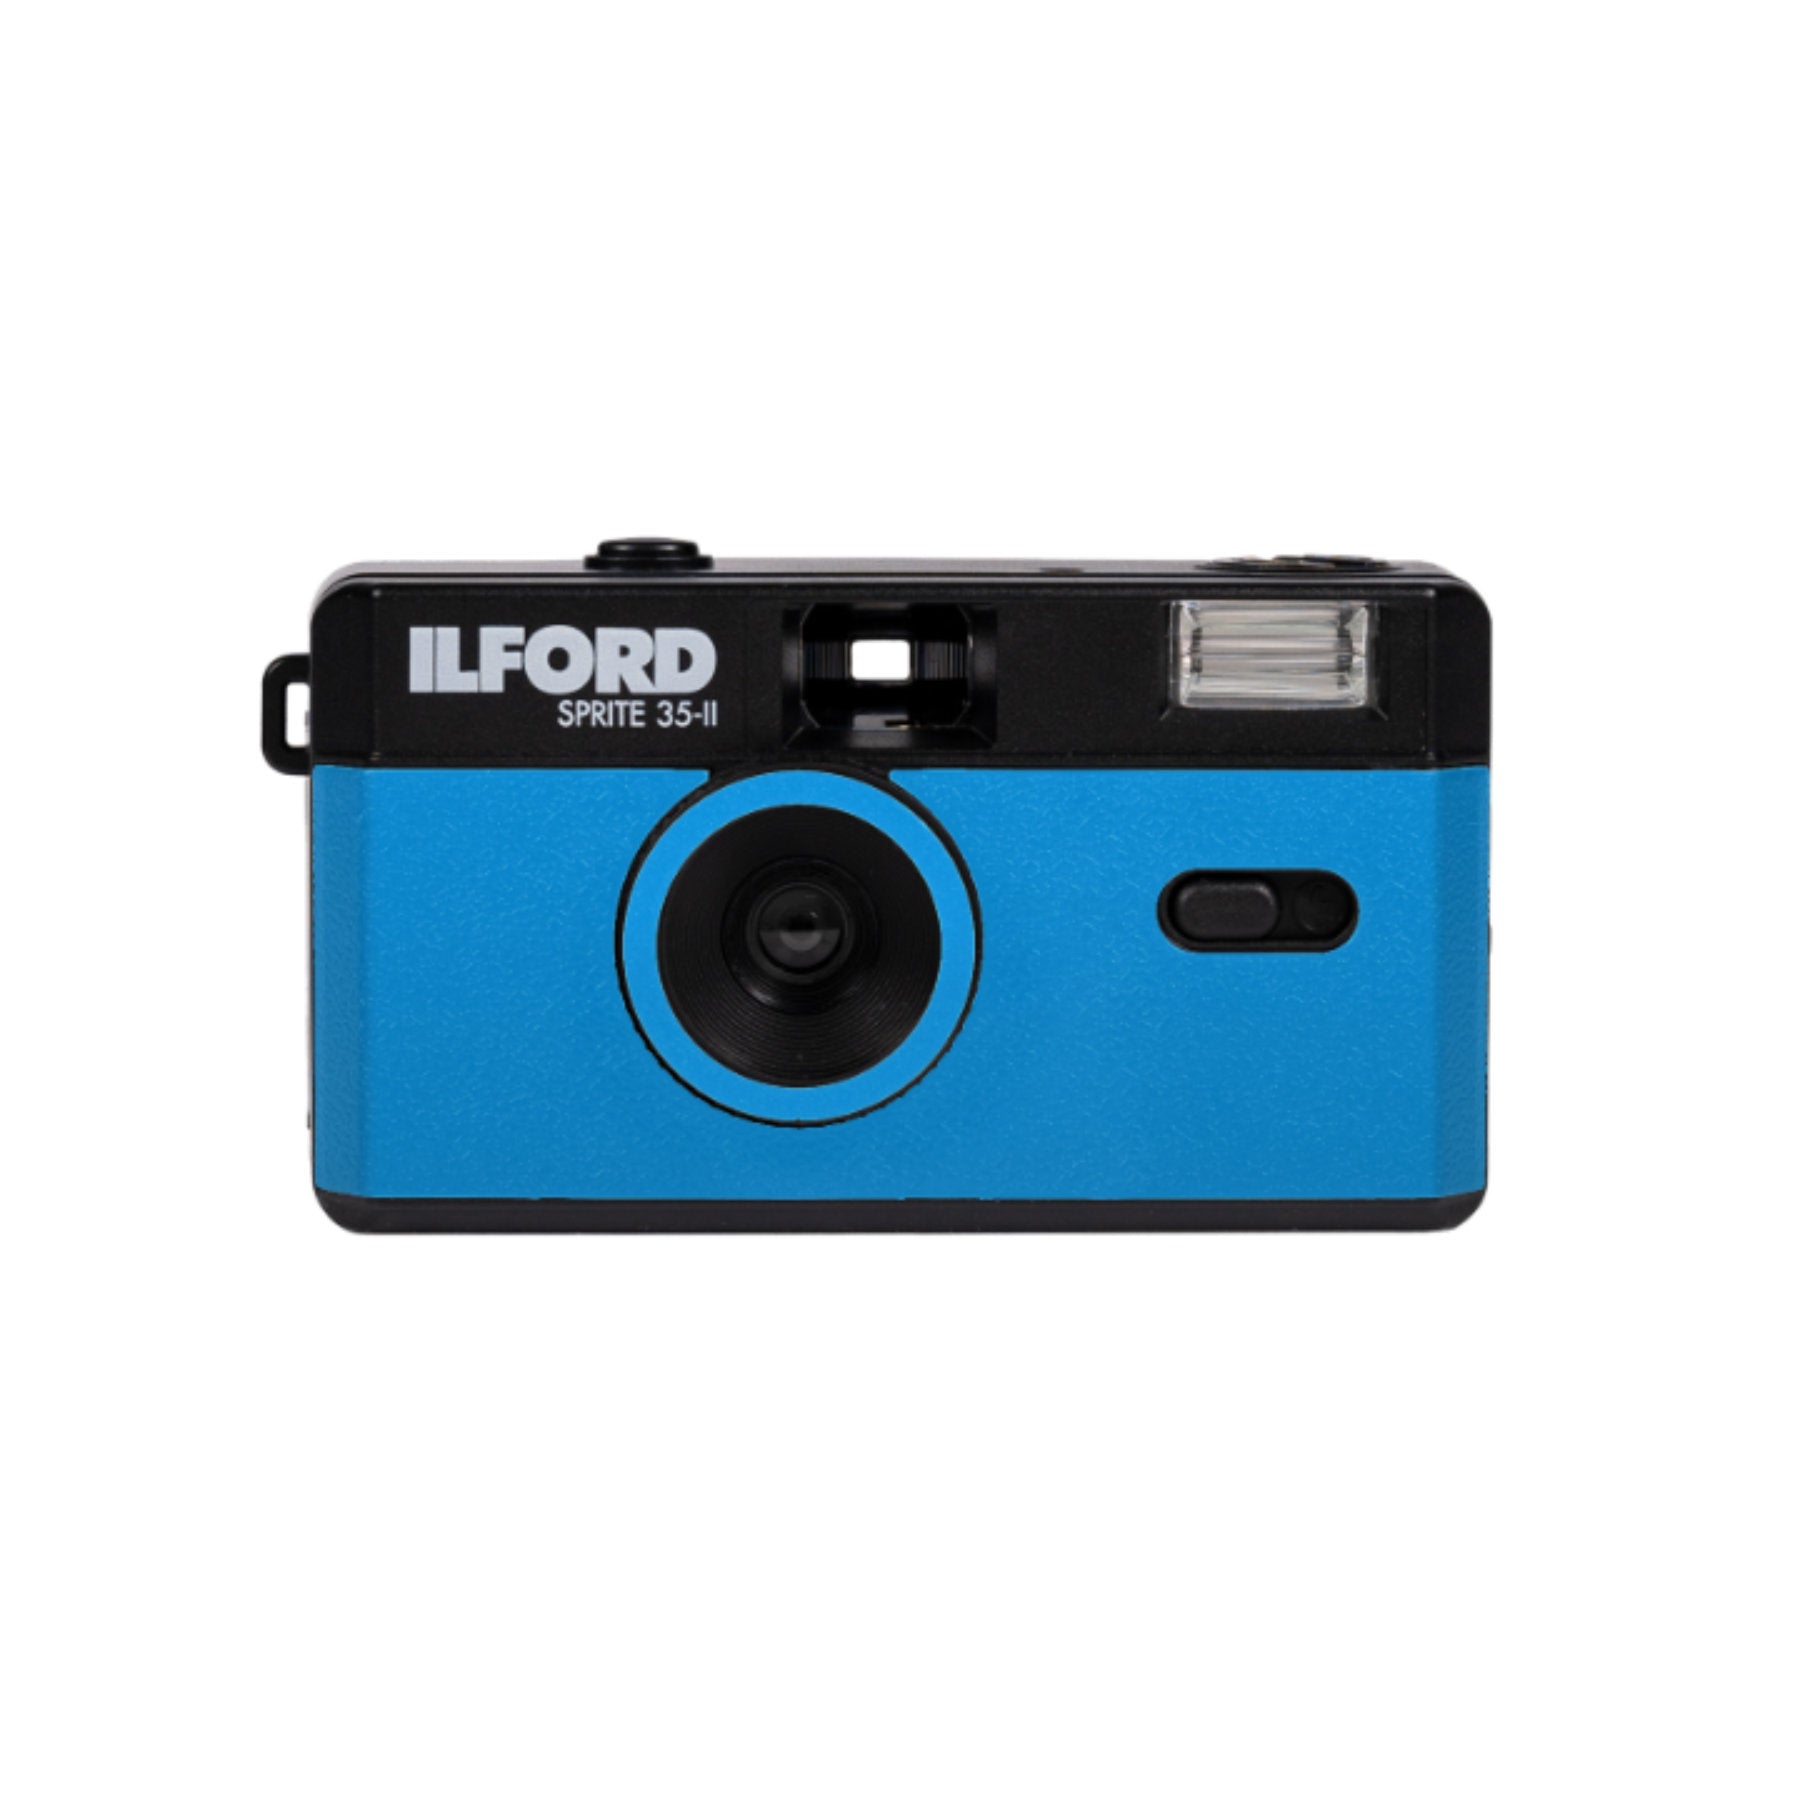 Buy ILFORD SPRITE 35-II reusable film camera - black & blue at Topic Store